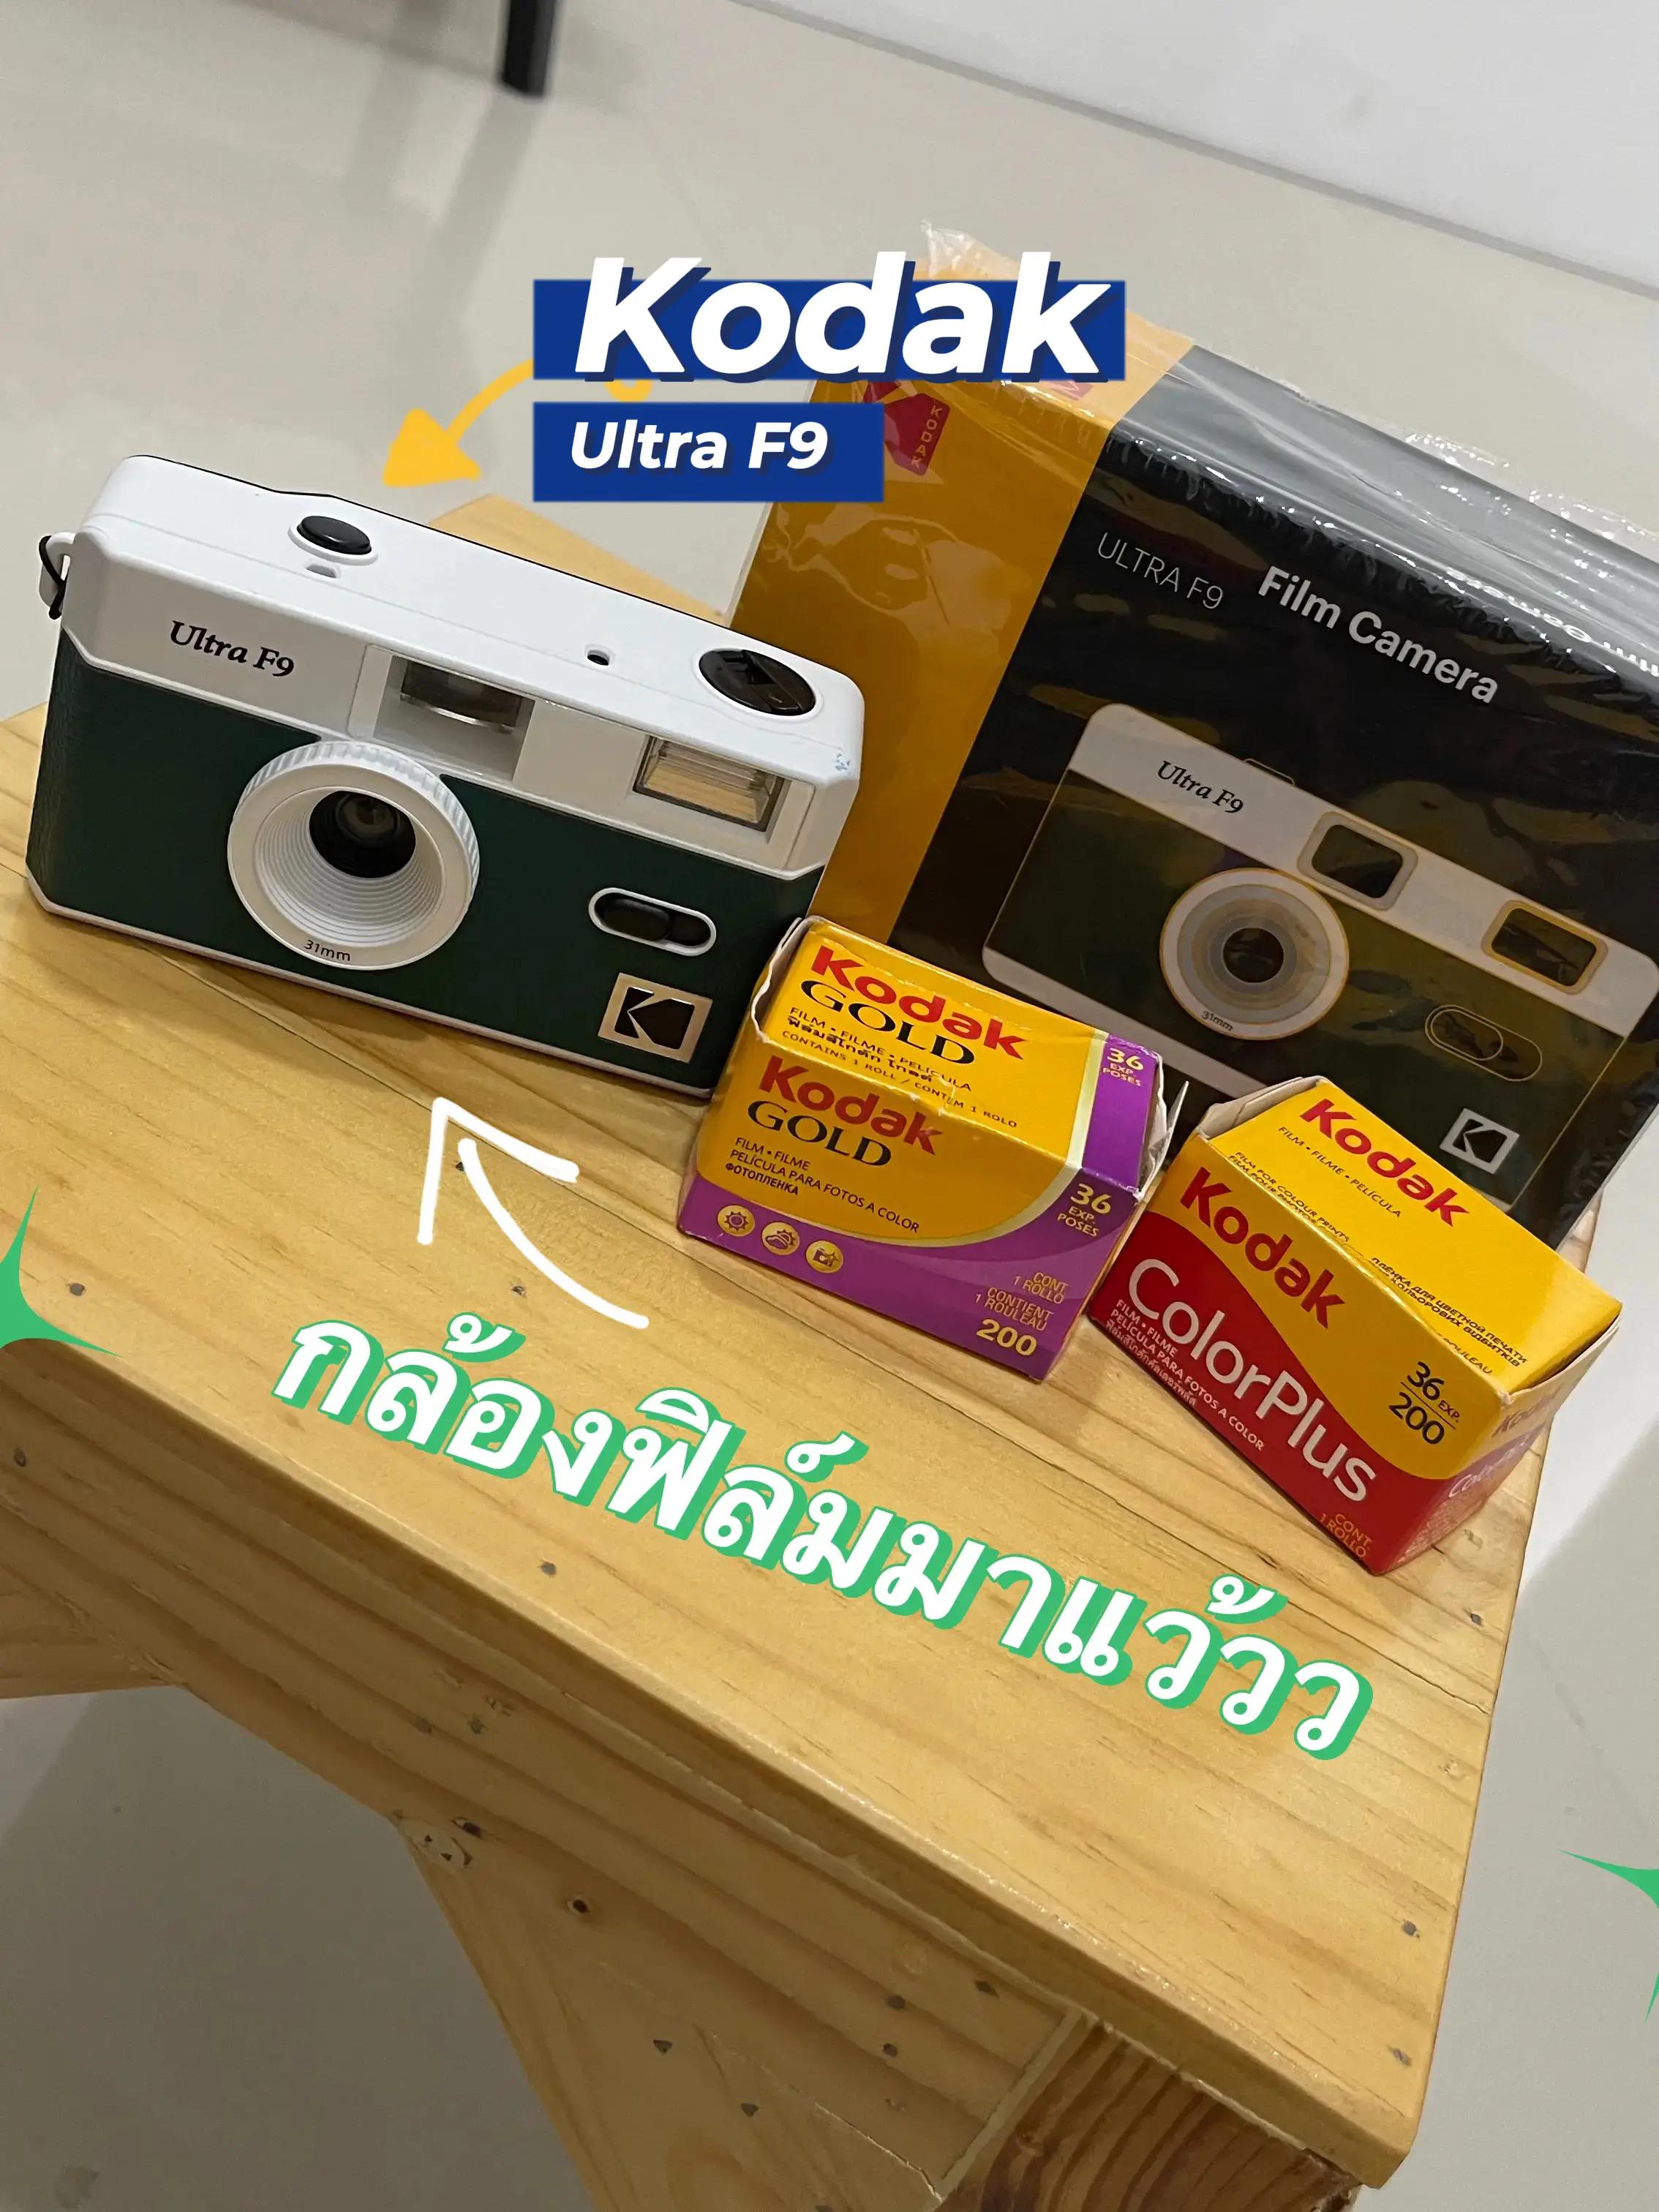 Kodak Ultra F9 Film Camera📸🎞, Gallery posted by James